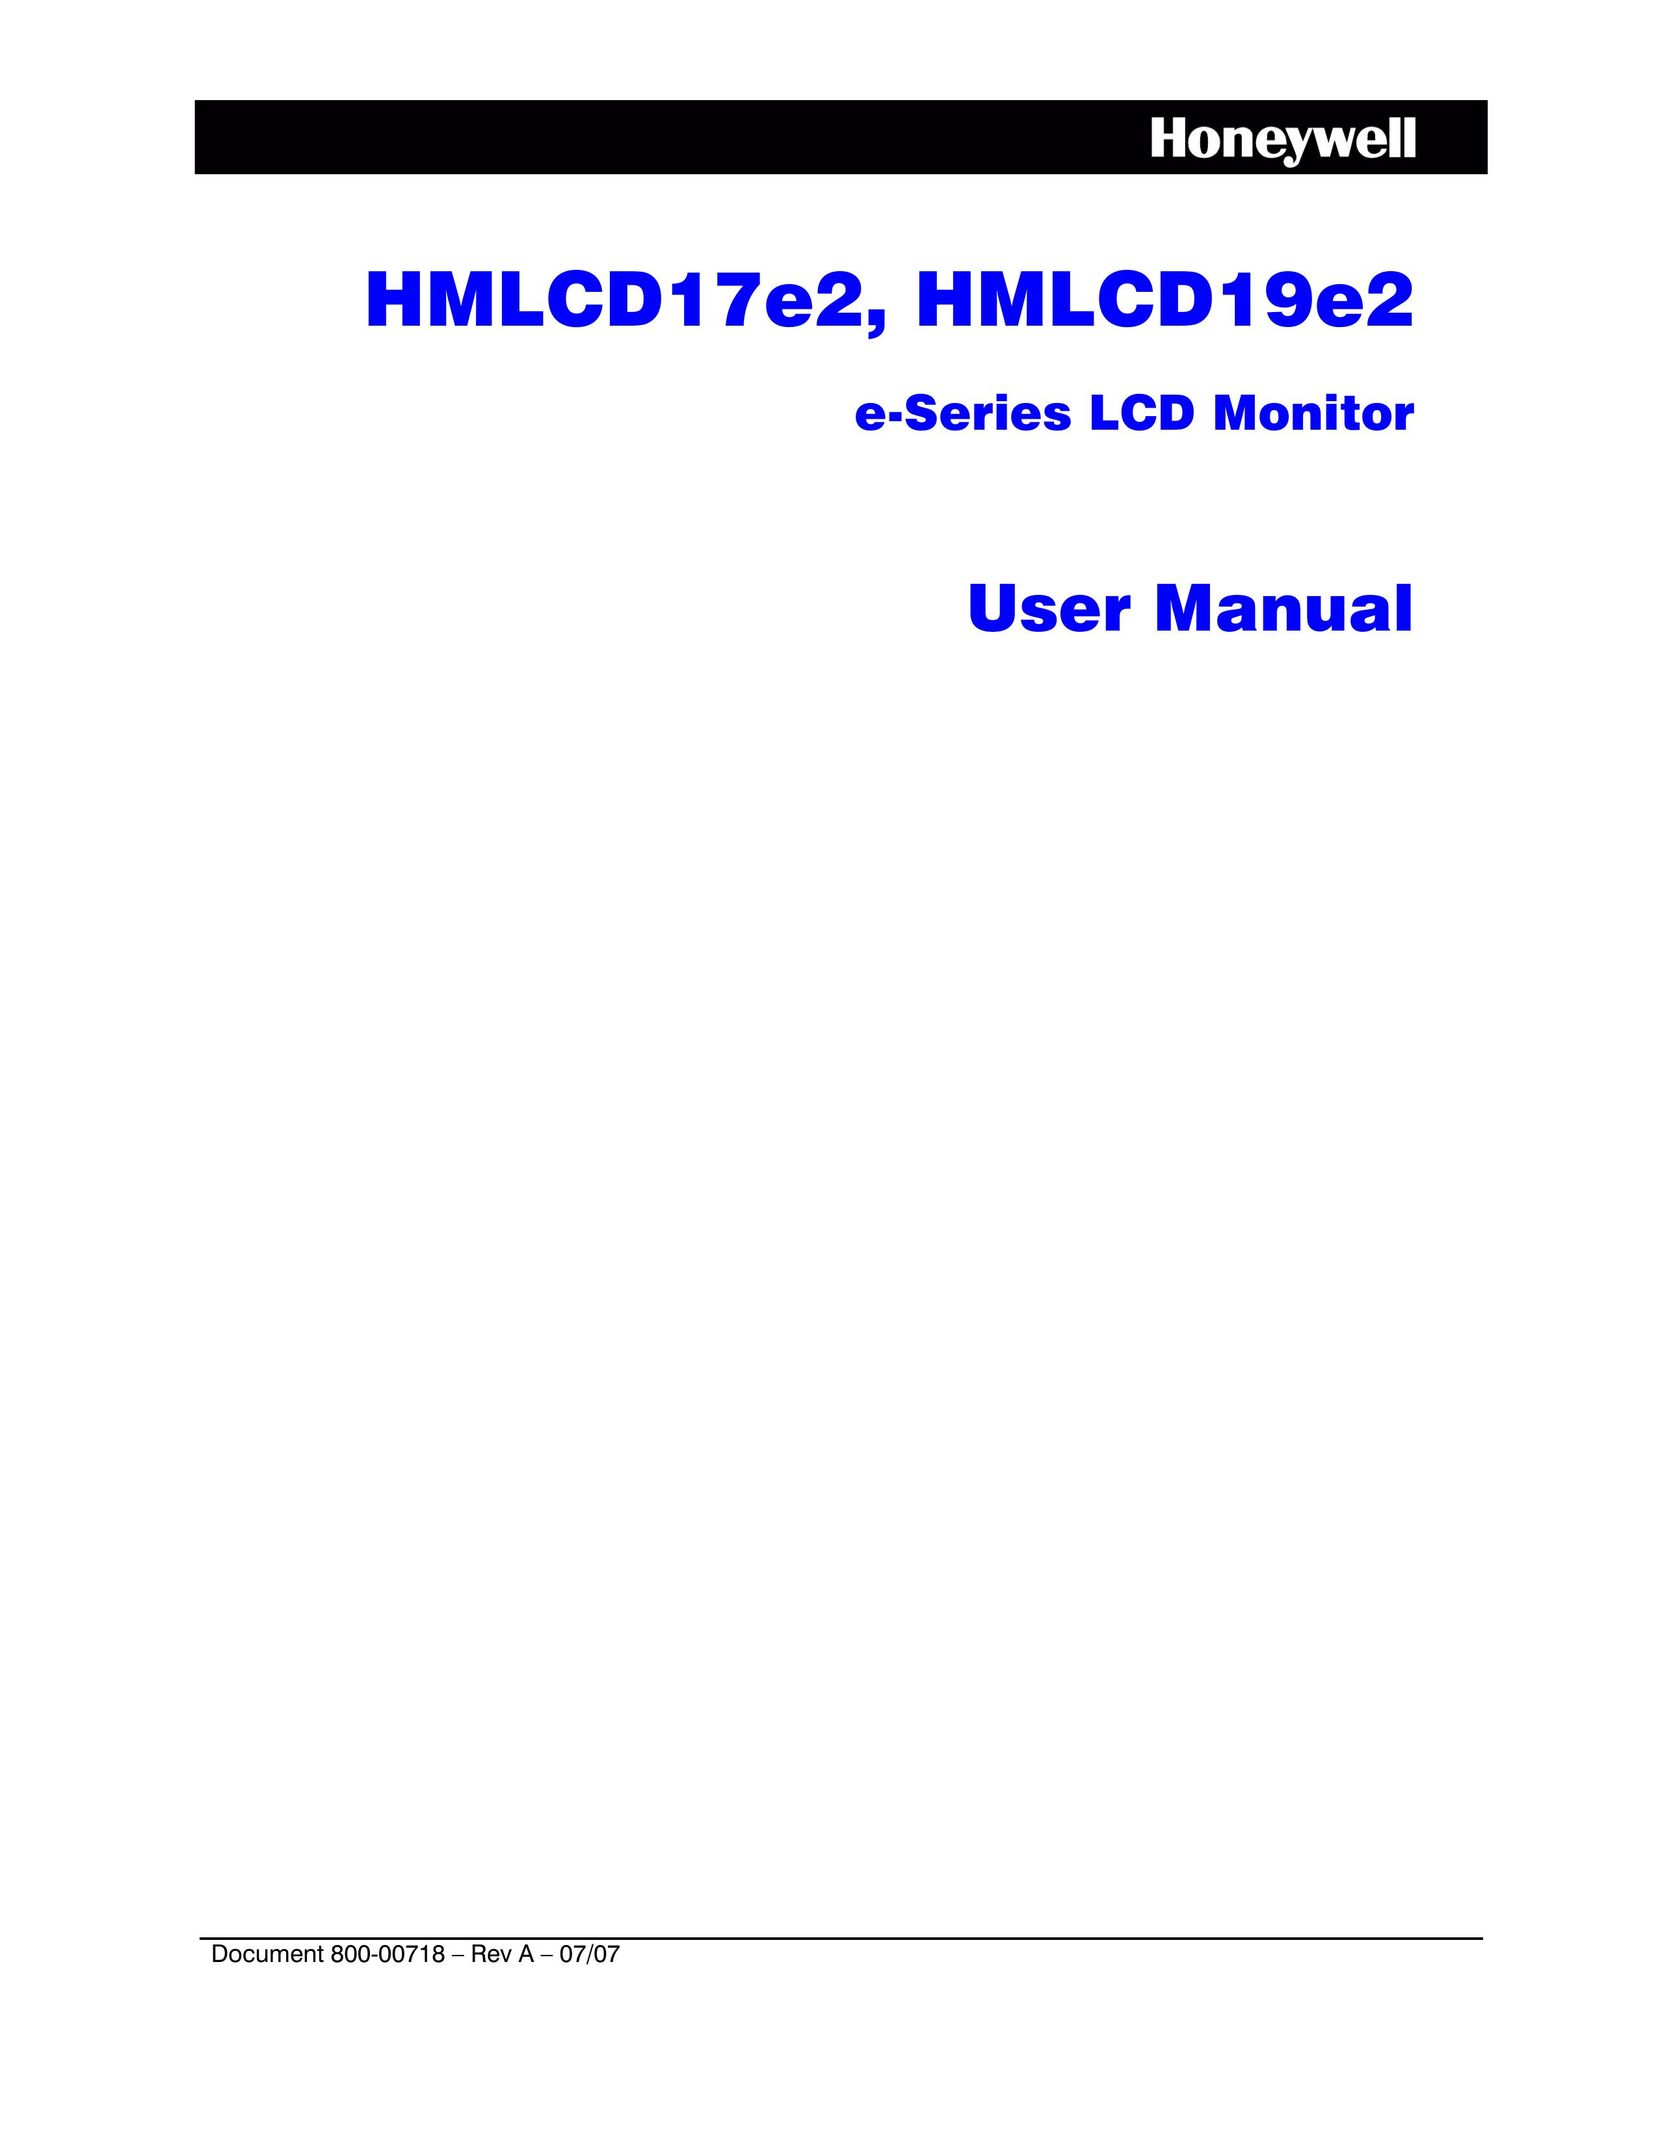 Honeywell HMLCD17e2 Computer Monitor User Manual